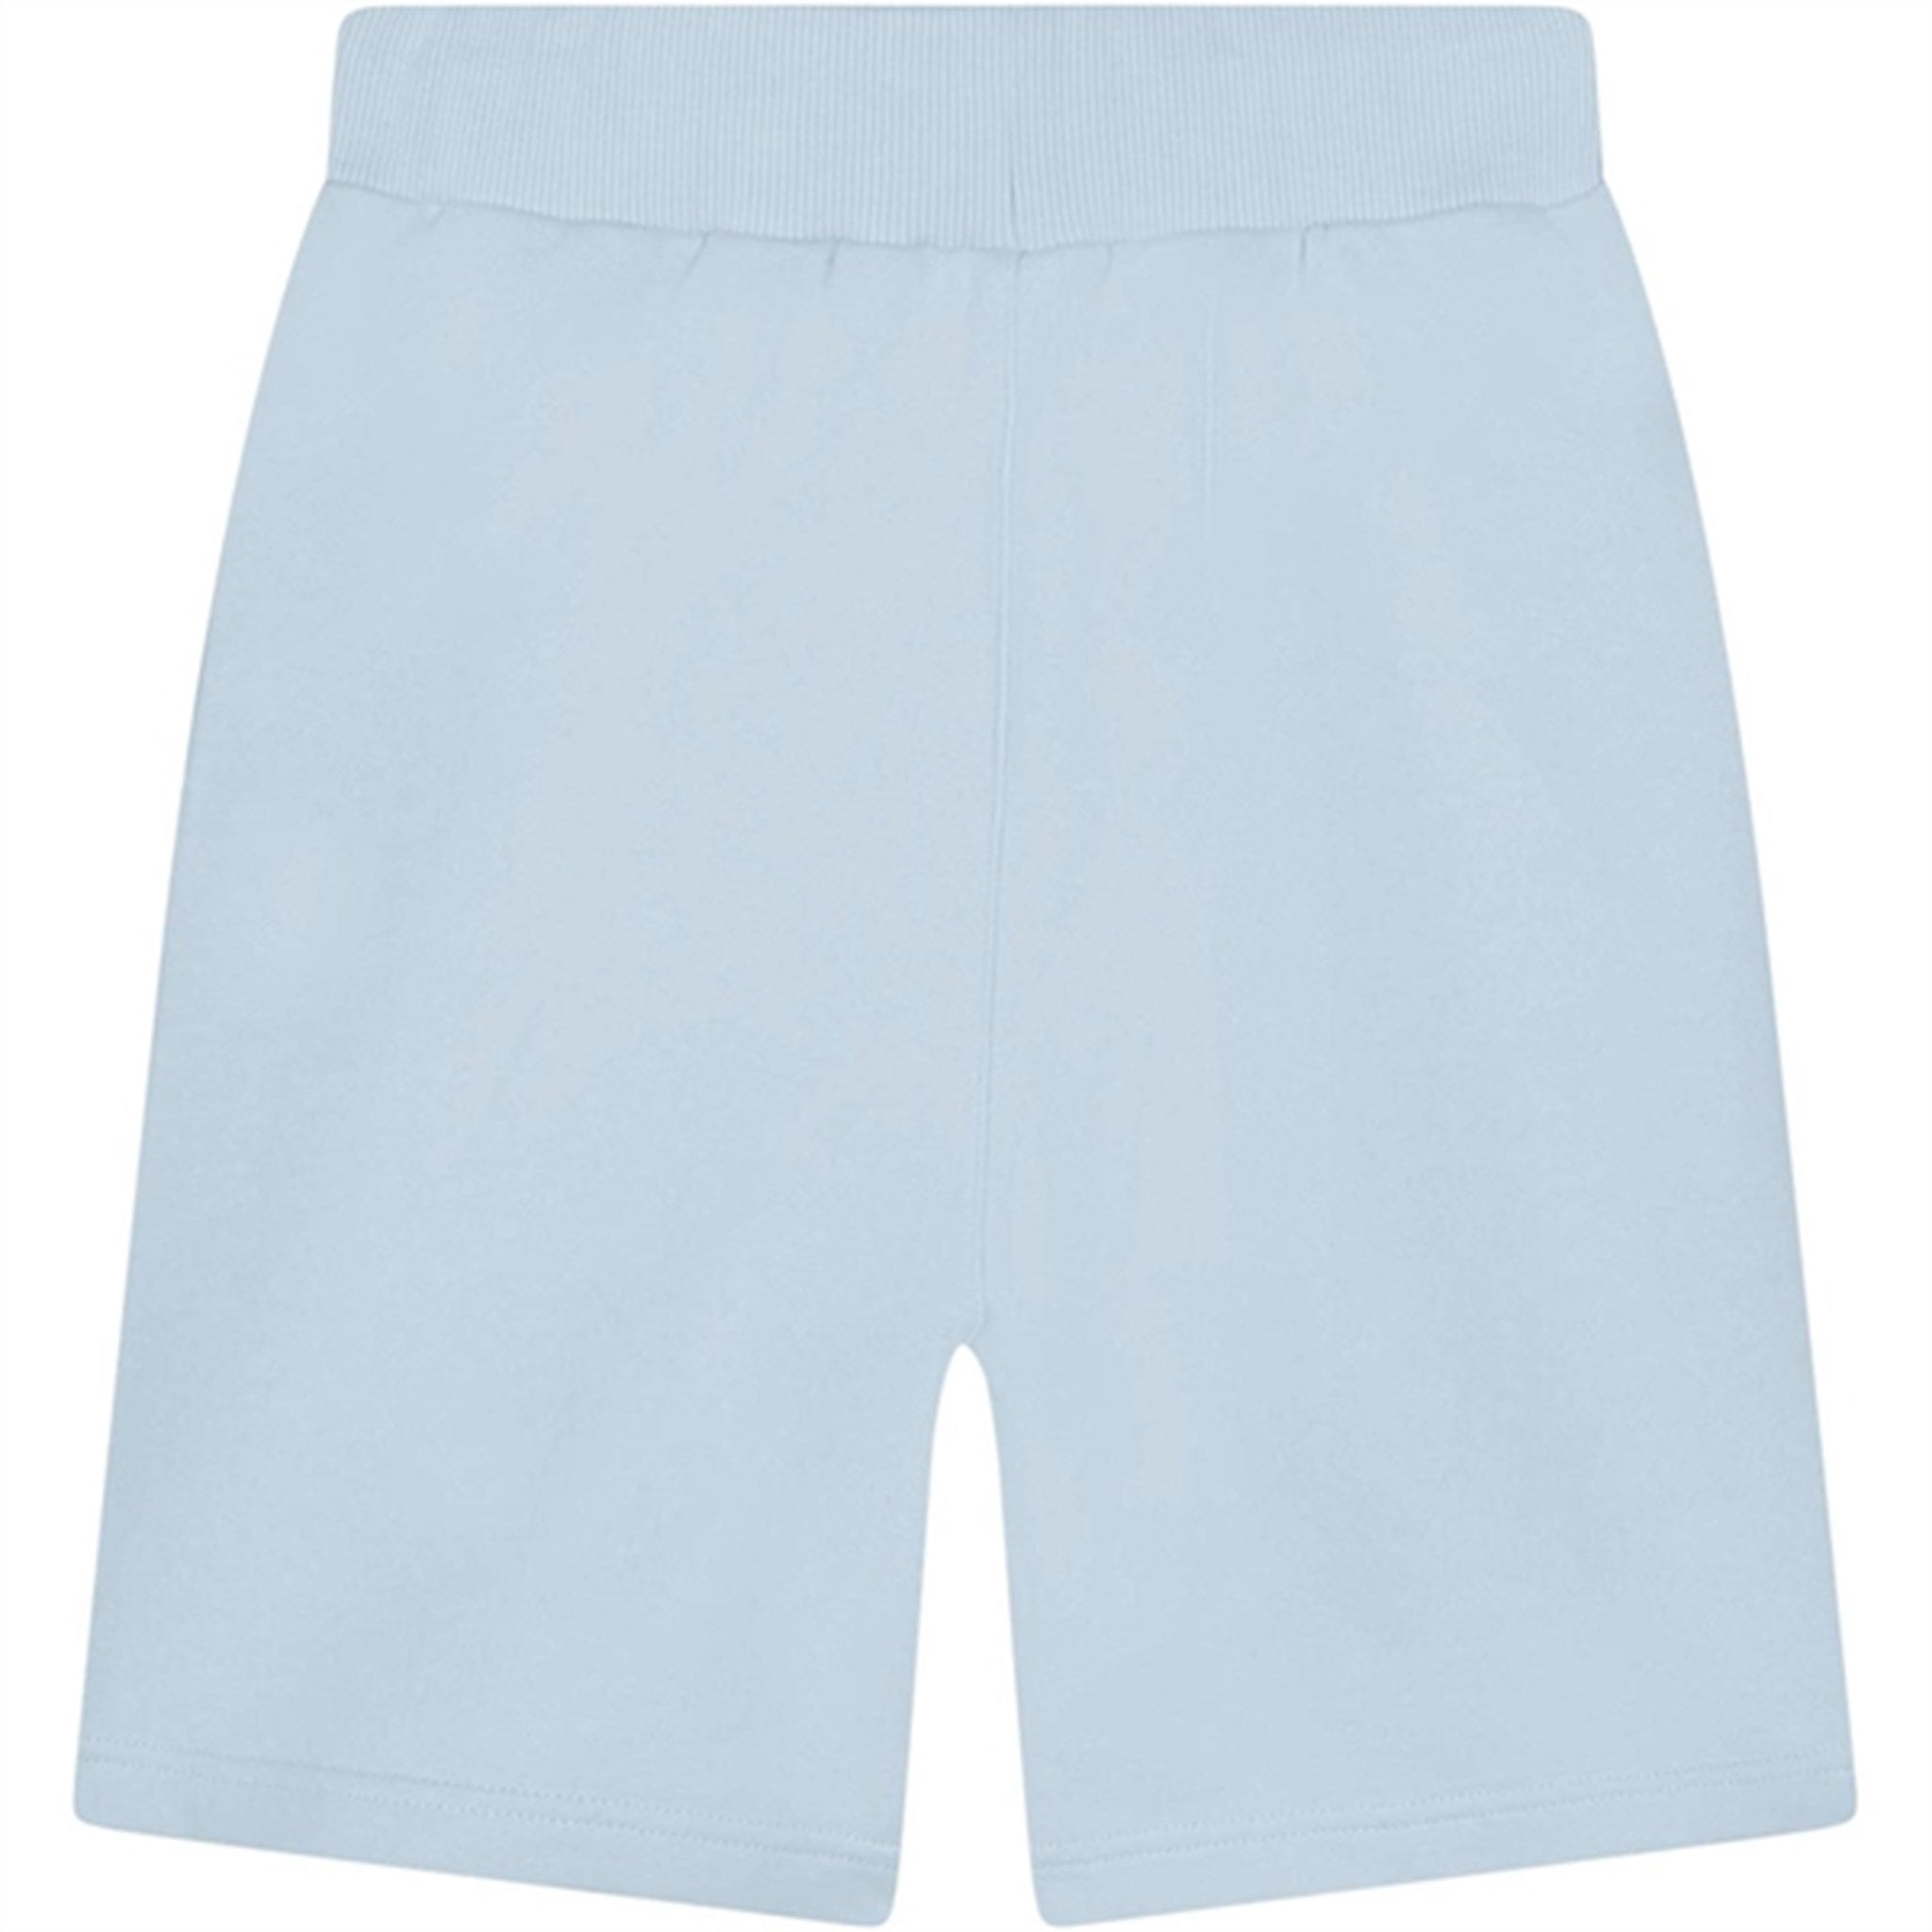 Kenzo Bermuda Shorts Pale Blue 2